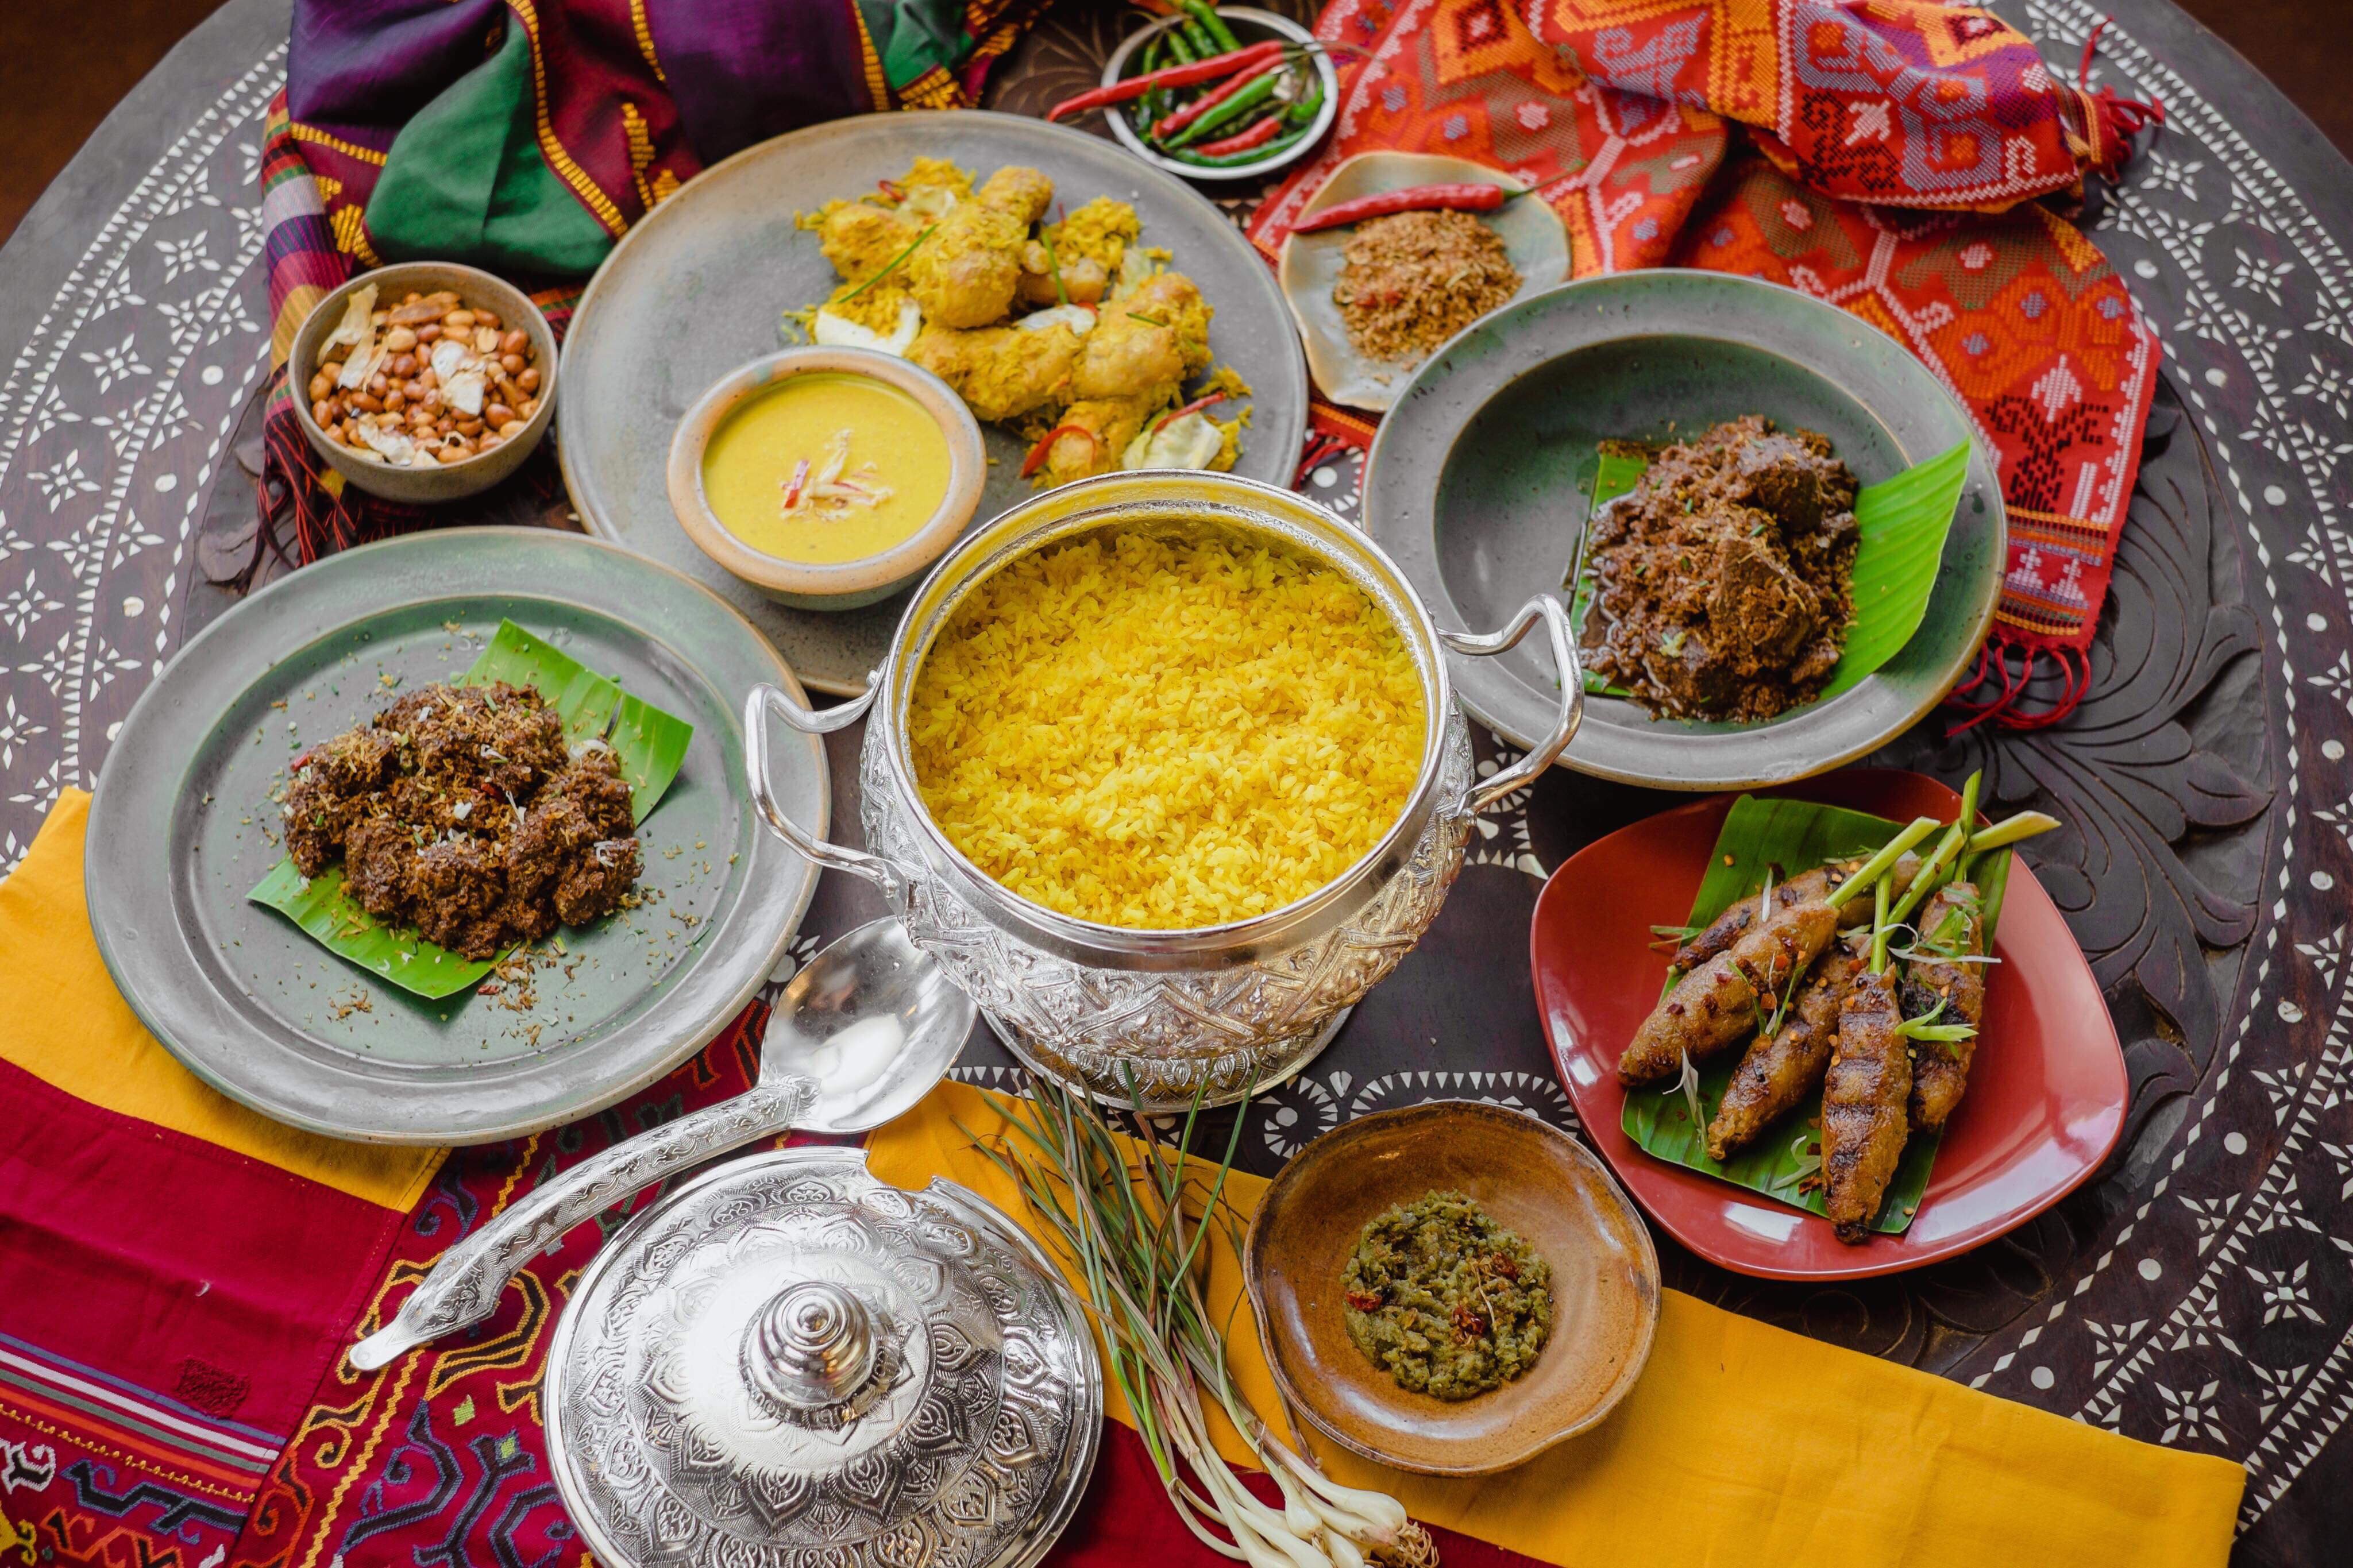 Explore Babu Kwan, CDO’s newest halal restaurant